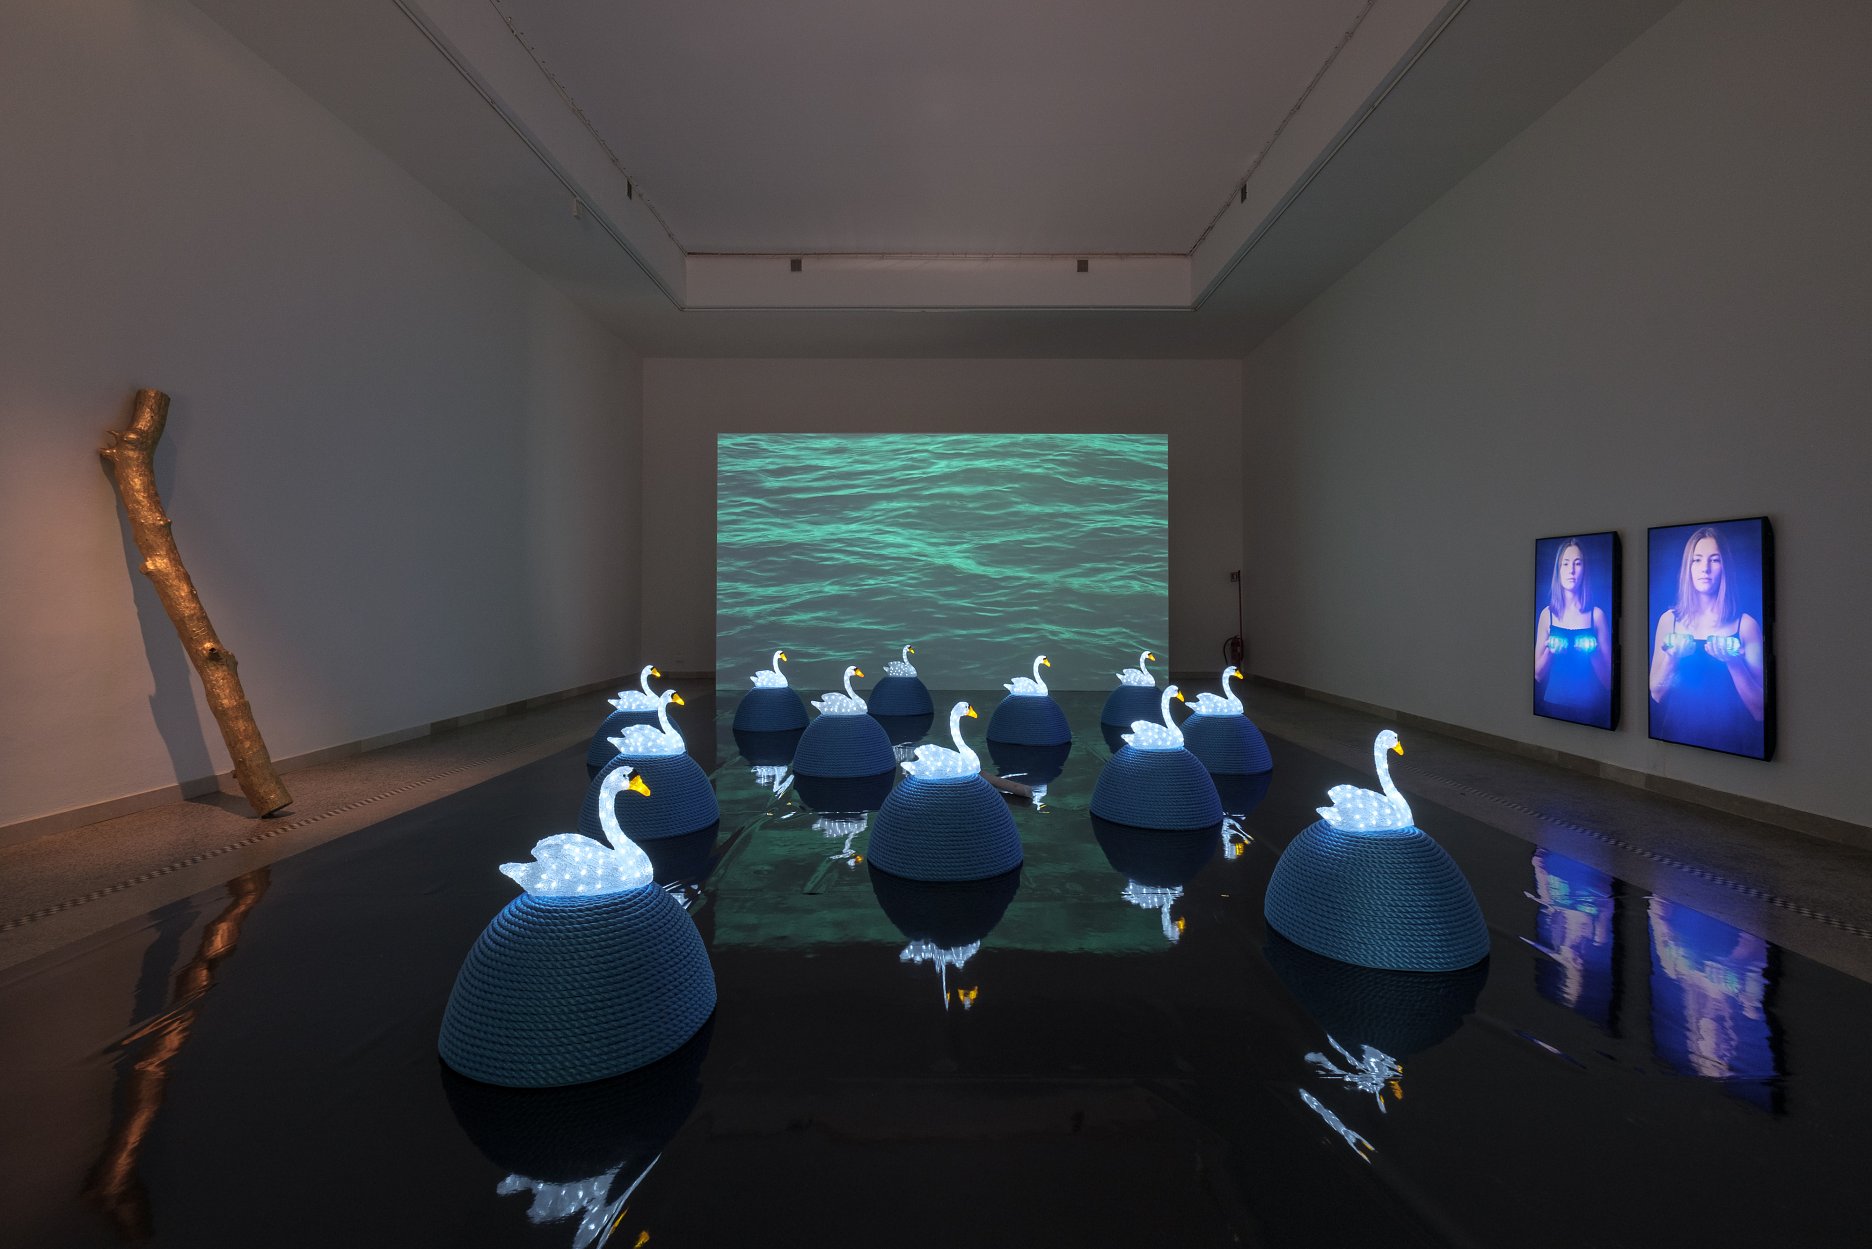 Jana Želibská: Swan Song Now / Labutia pieseň teraz. 2017. Multimedia installation / Multimediálna inštalácia. 2017. 